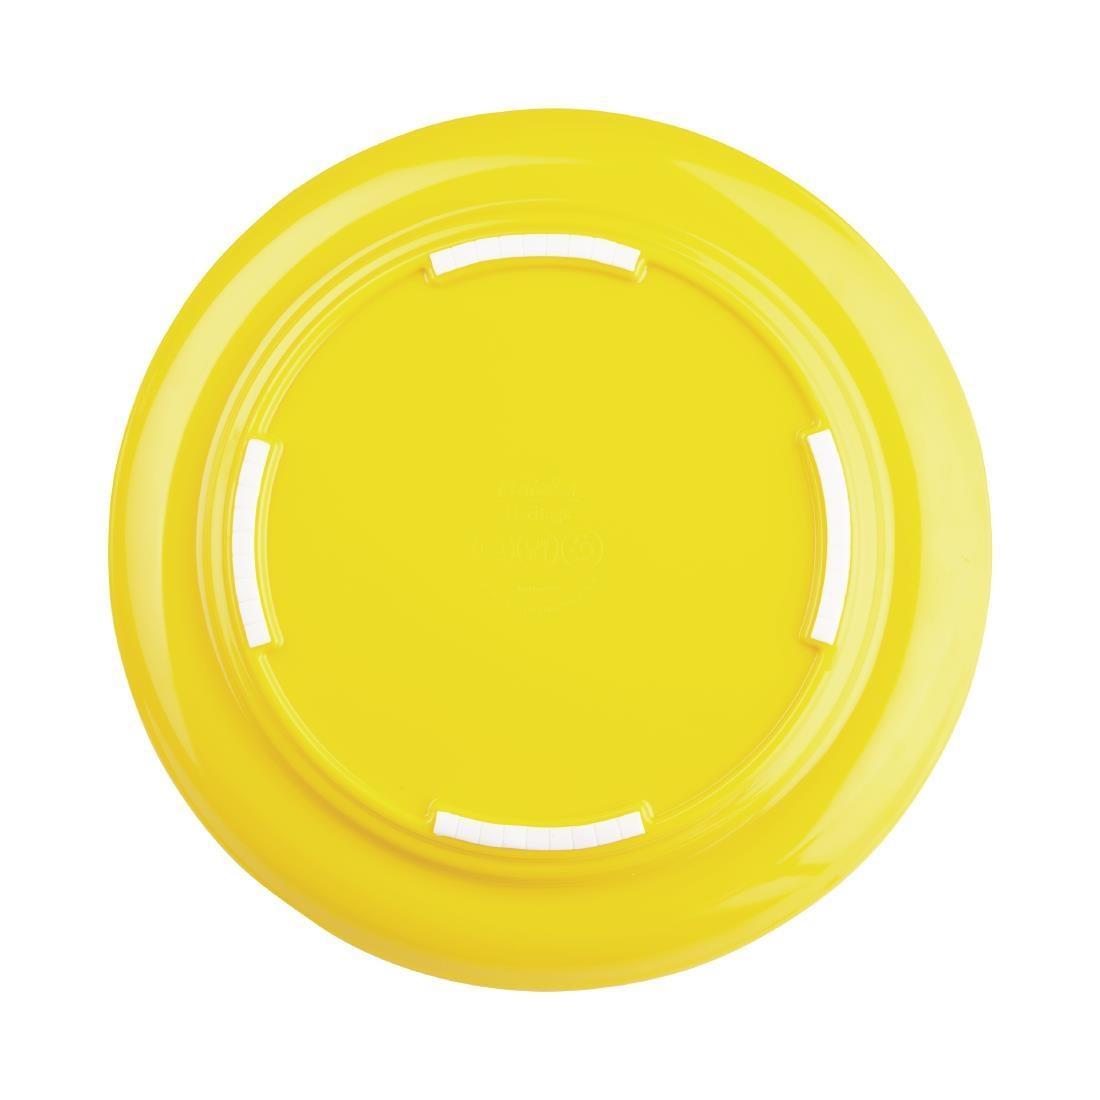 Olympia Kristallon Heritage Raised Rim Plates Yellow 252mm (Pack of 4) - DW707  - 5